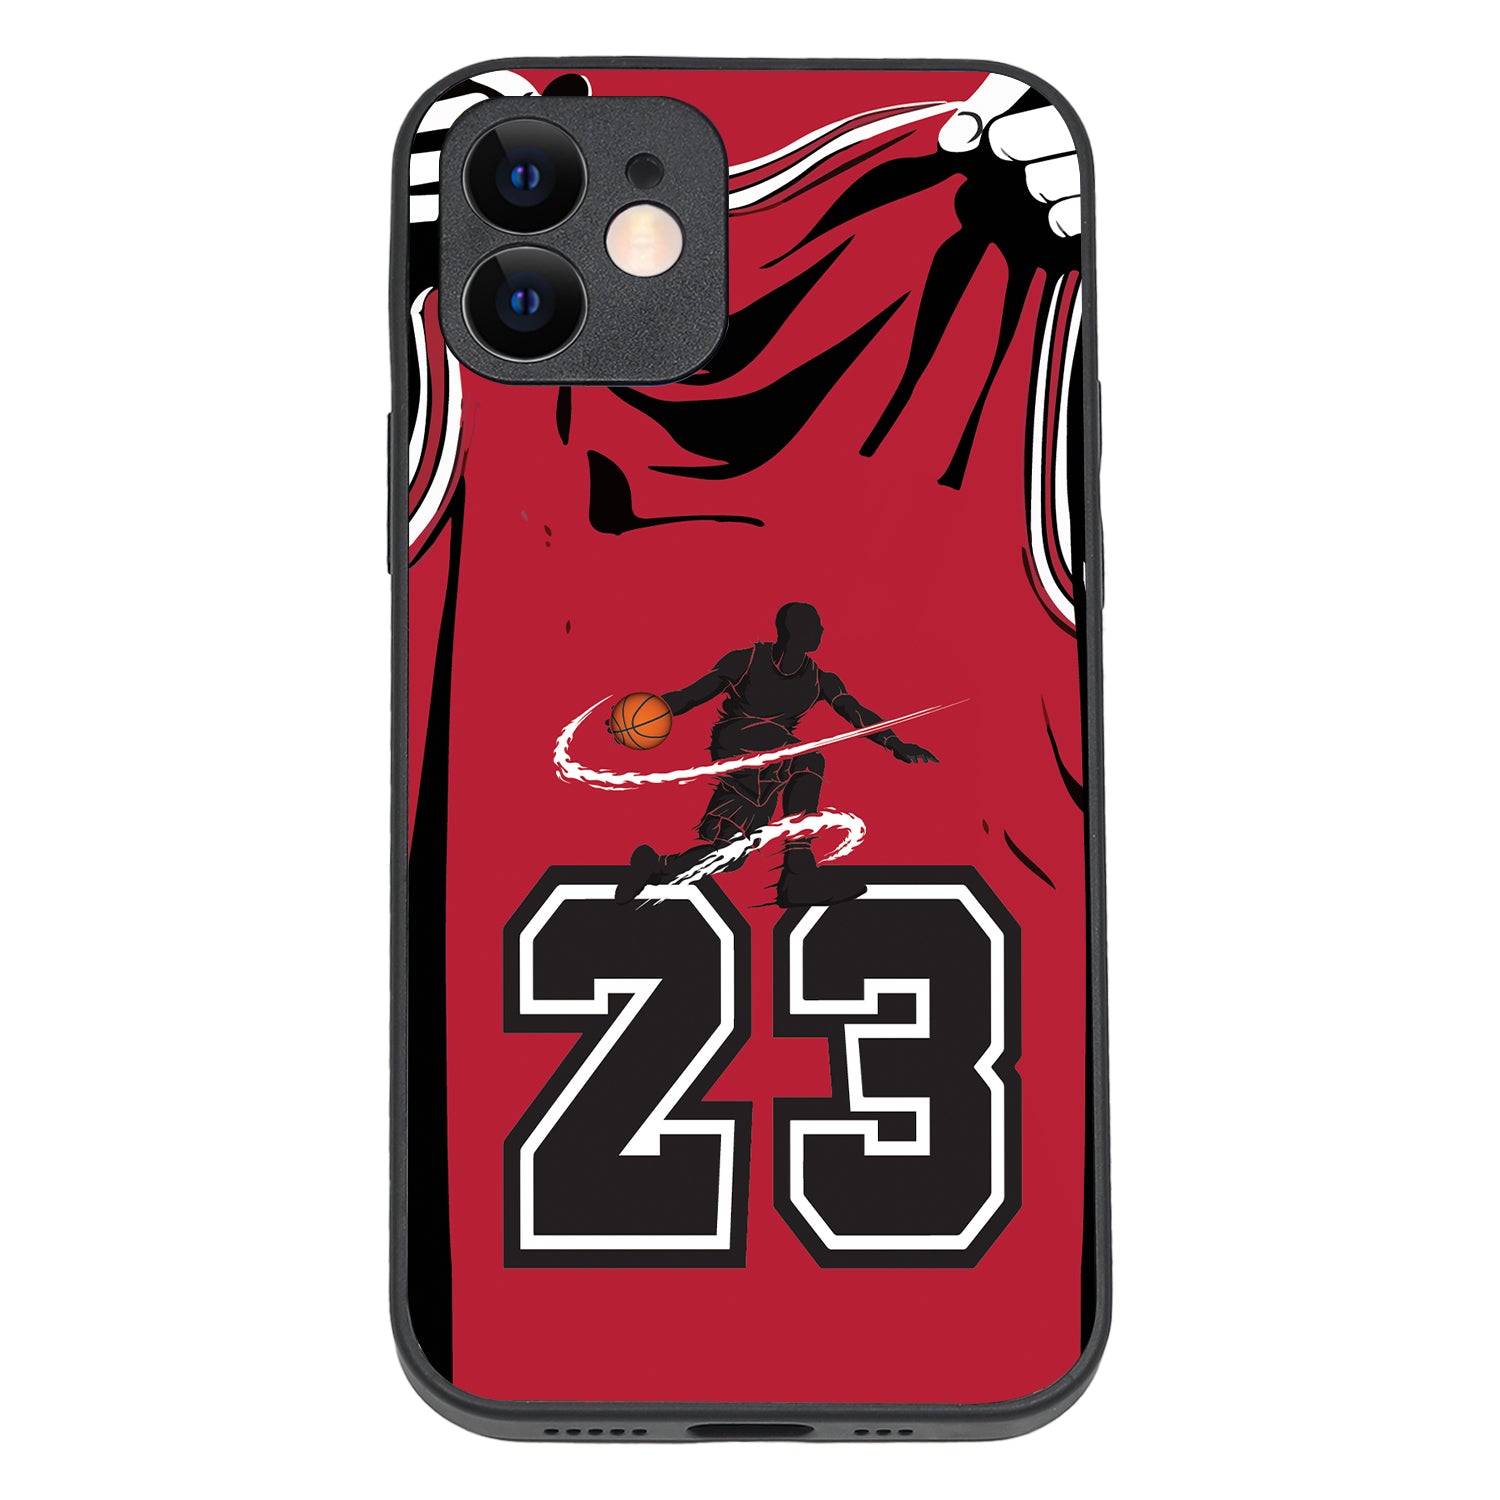 Jorden Jersey Sports iPhone 12 Case